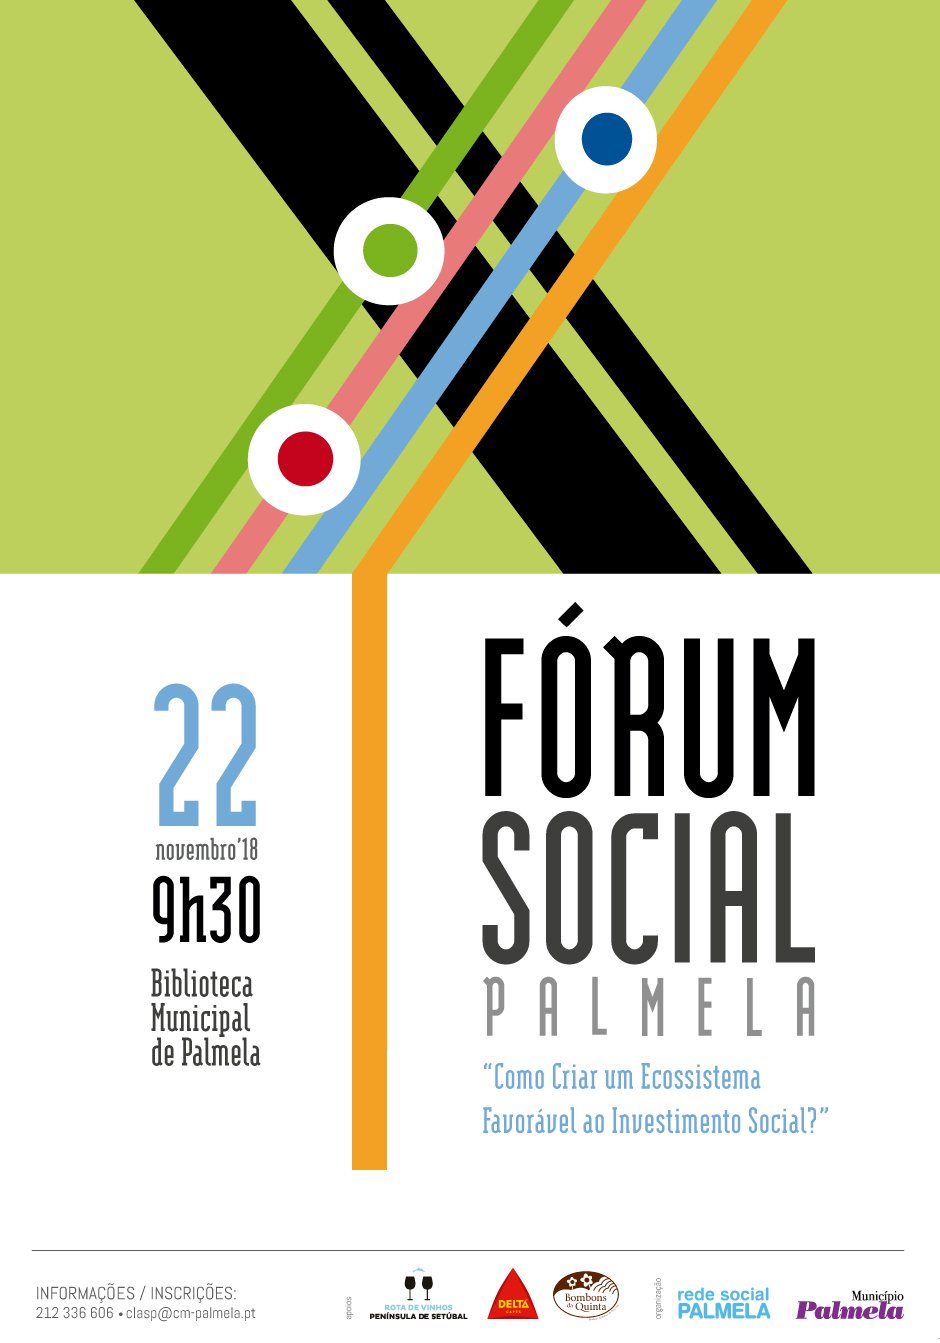 Fórum debate sustentabilidade da economia social